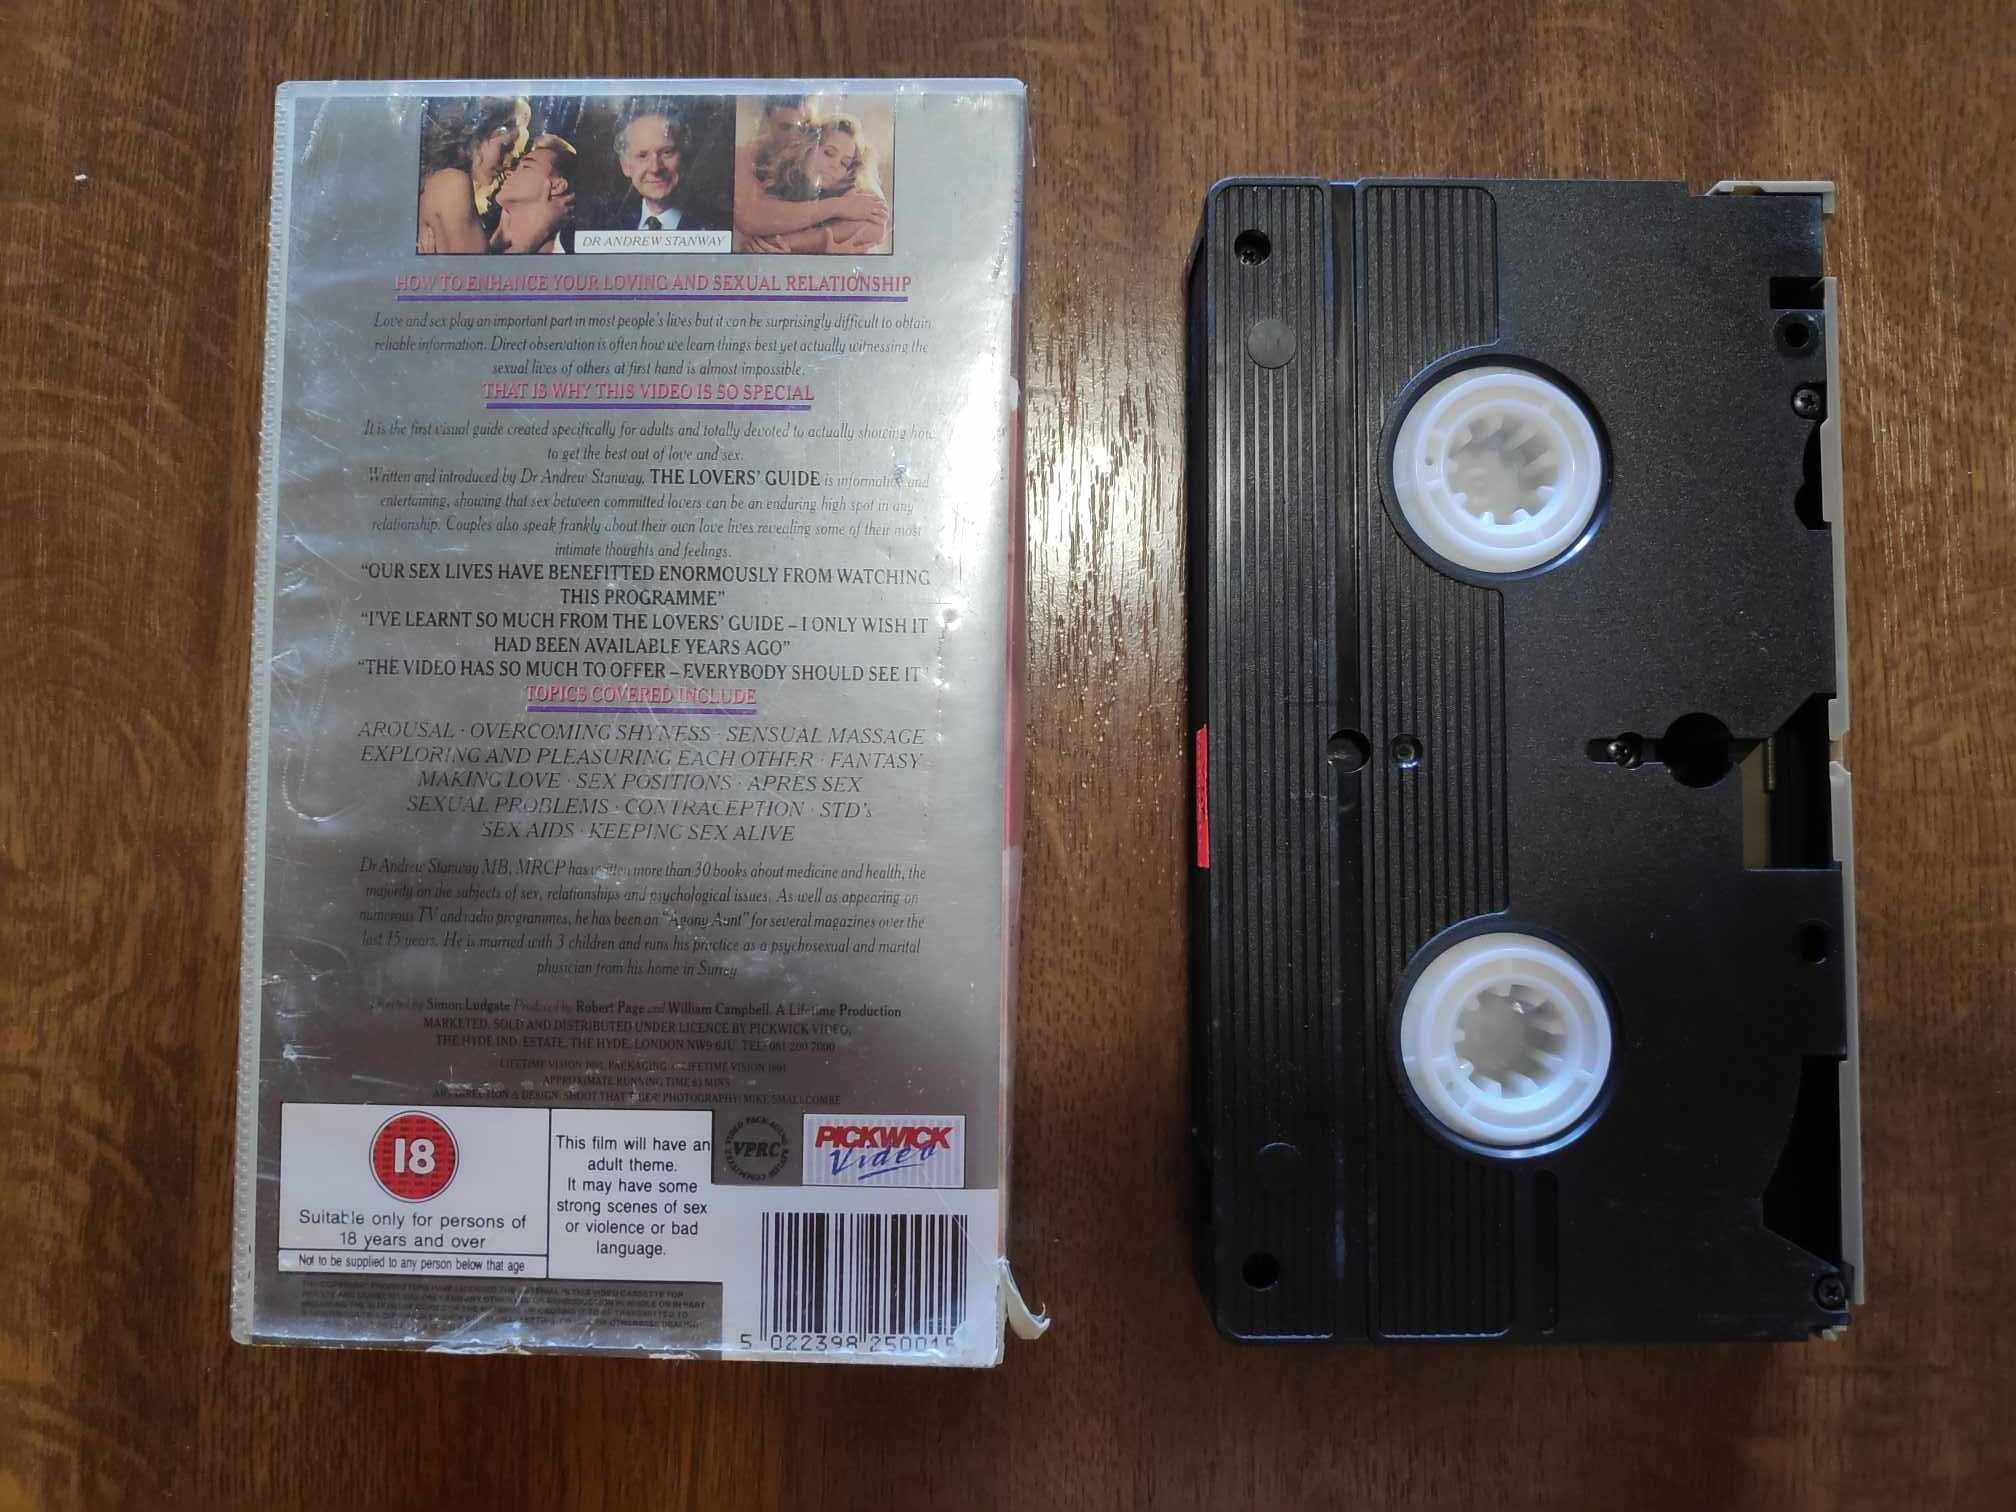 kaseta VHS The Lovers' Guide poradnik Dr.Andrew Stanway